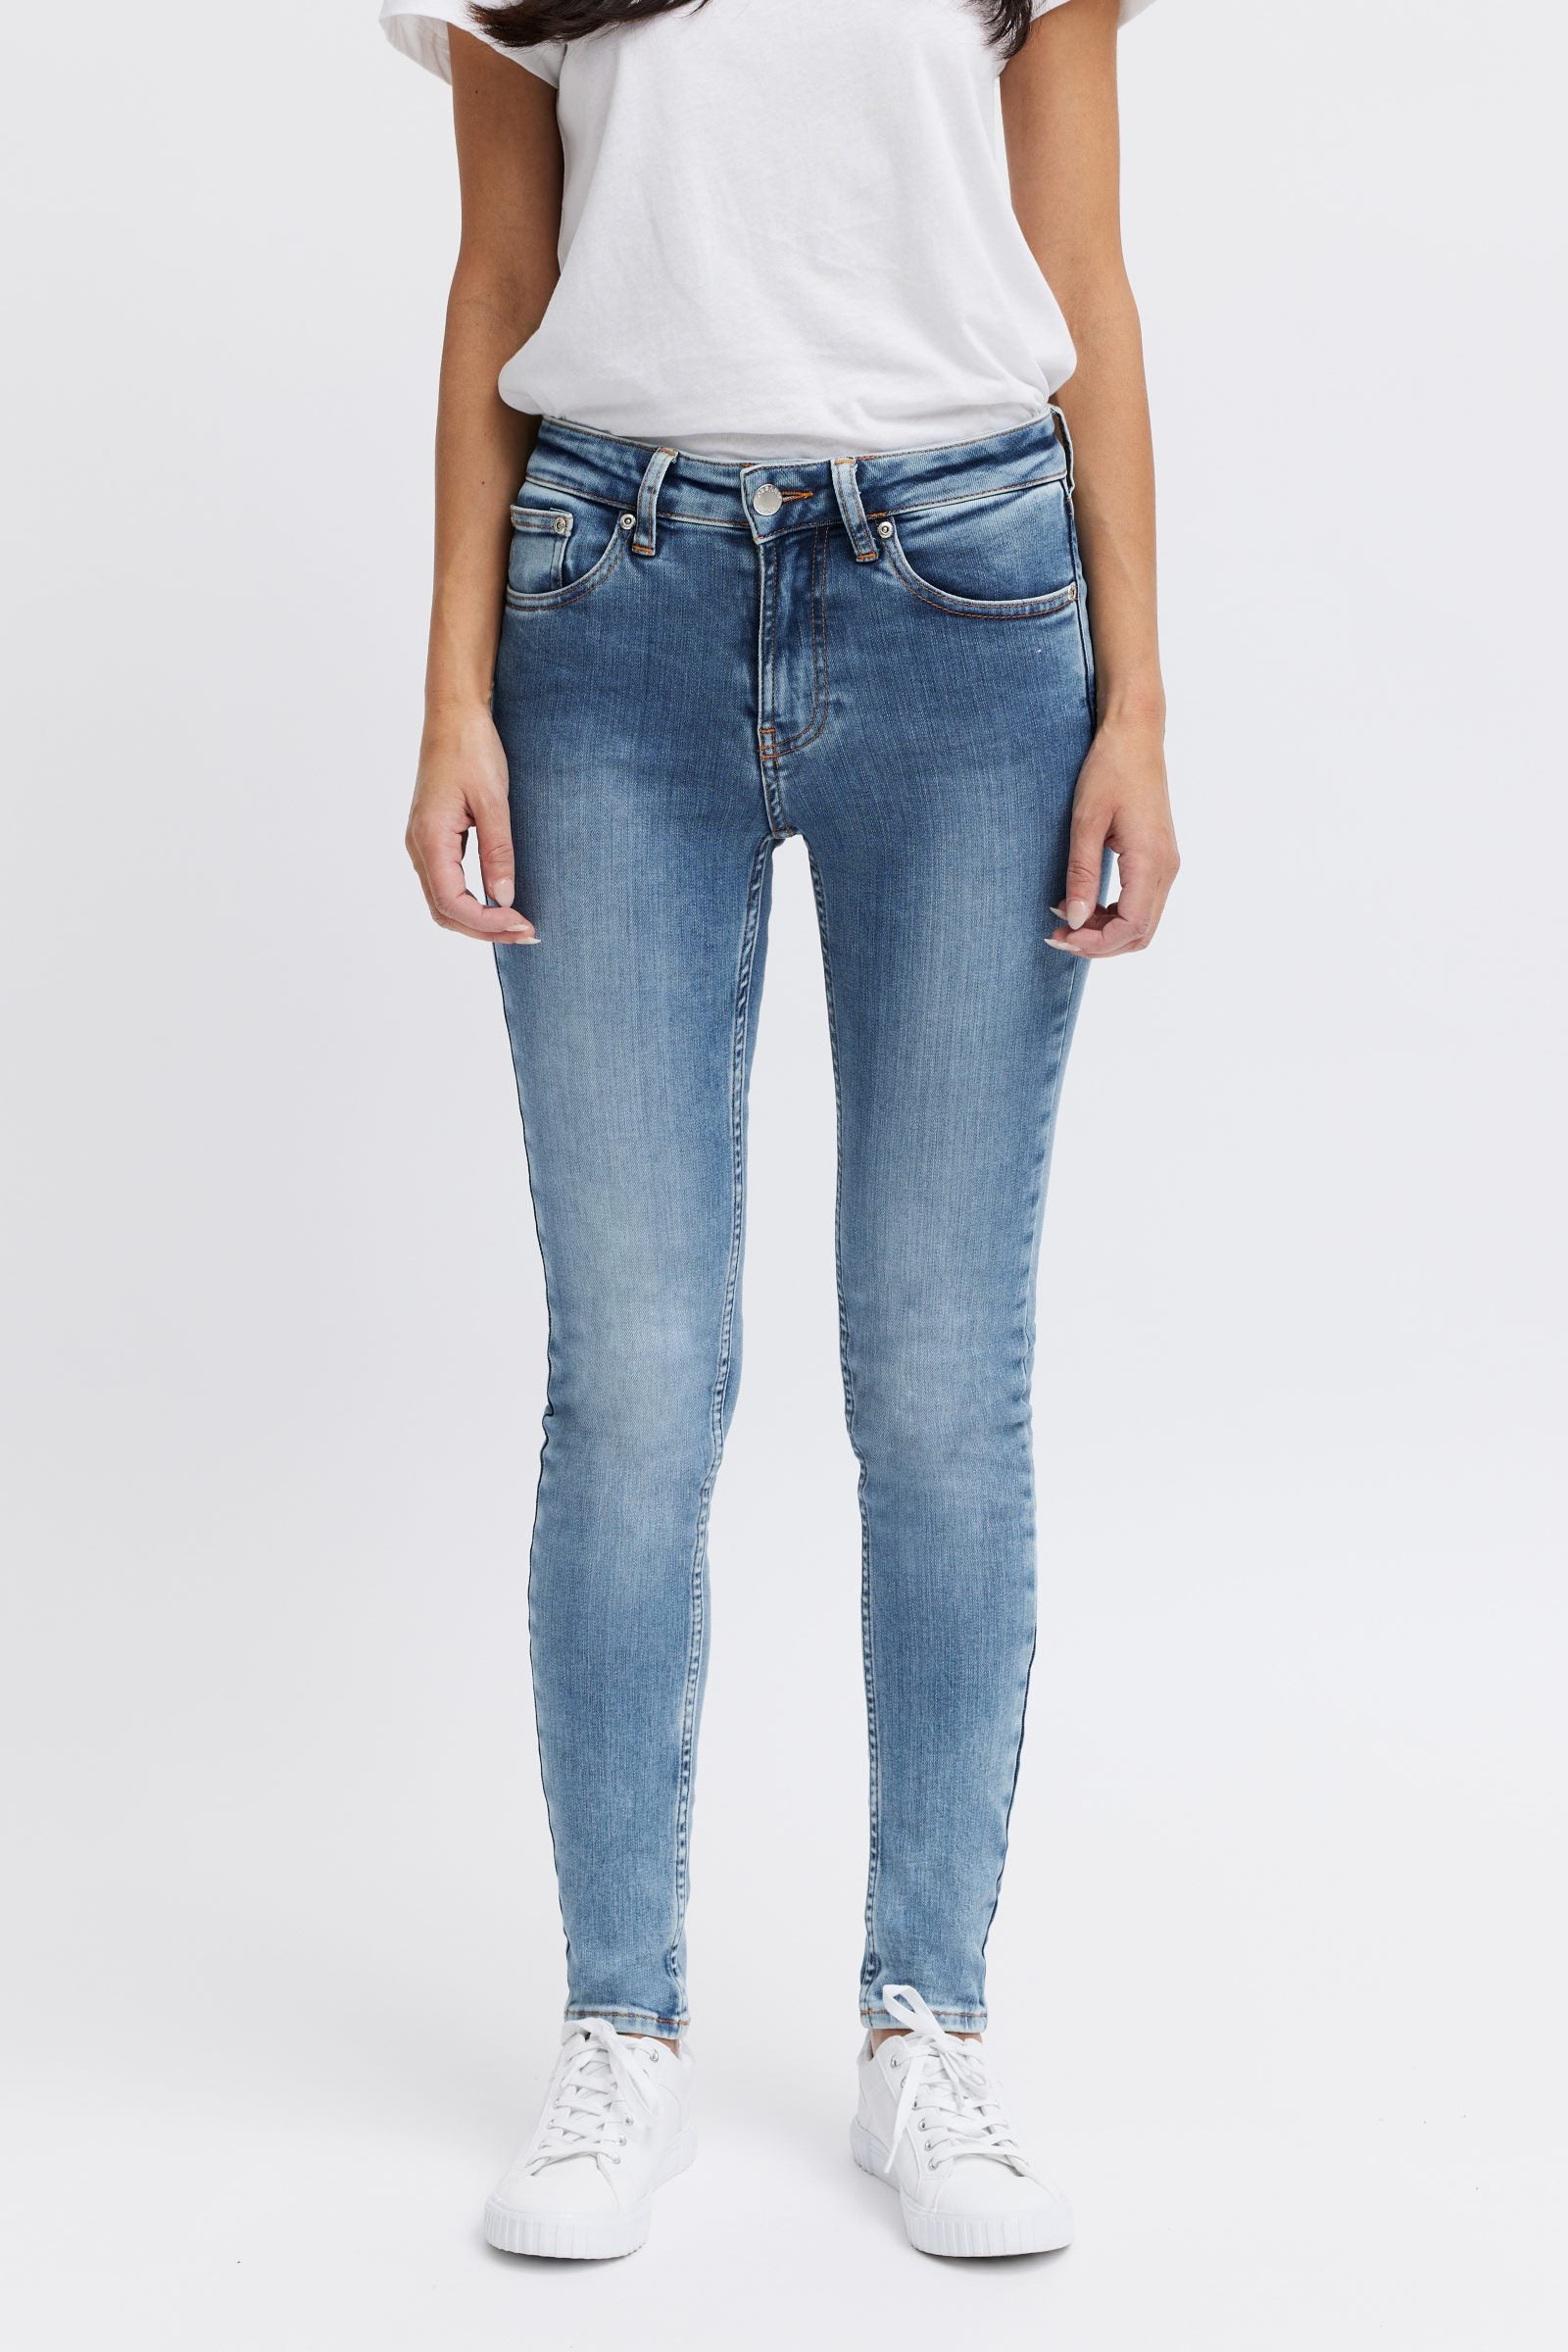 Organic light blue slim fit jeans for women - Best comfortable skinny jeans